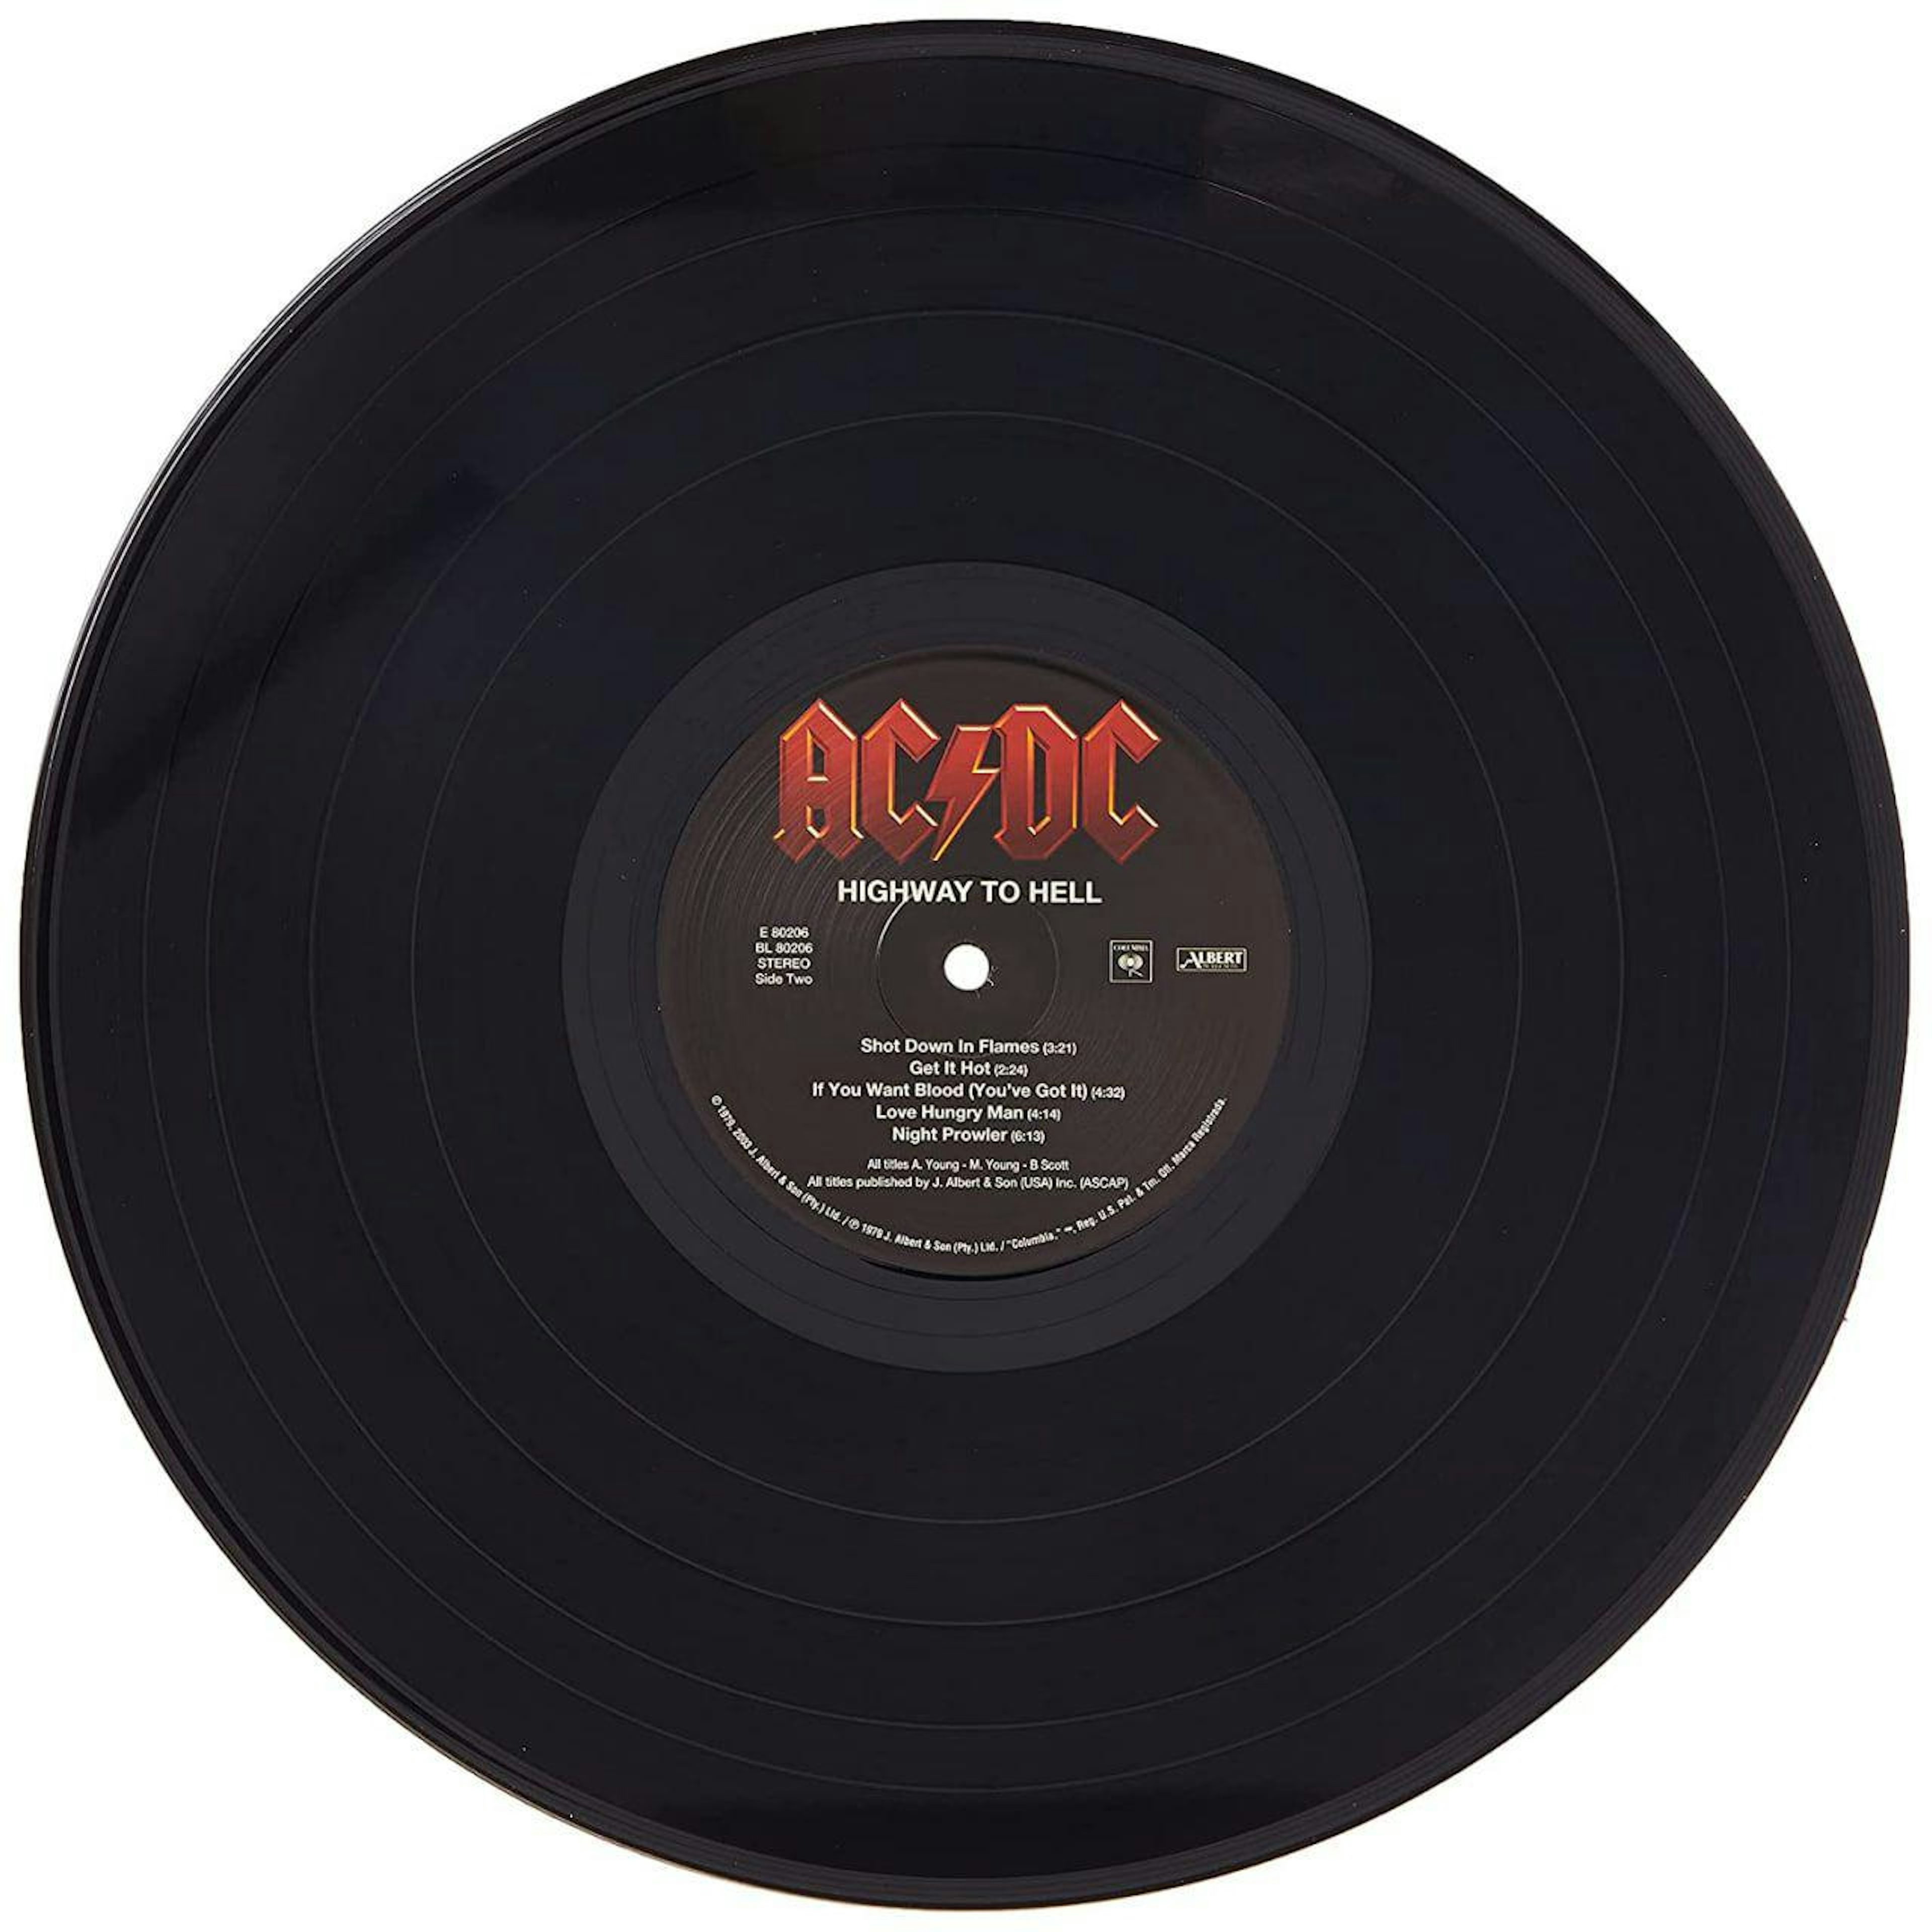 AC/DC to Hell Vinyl Record